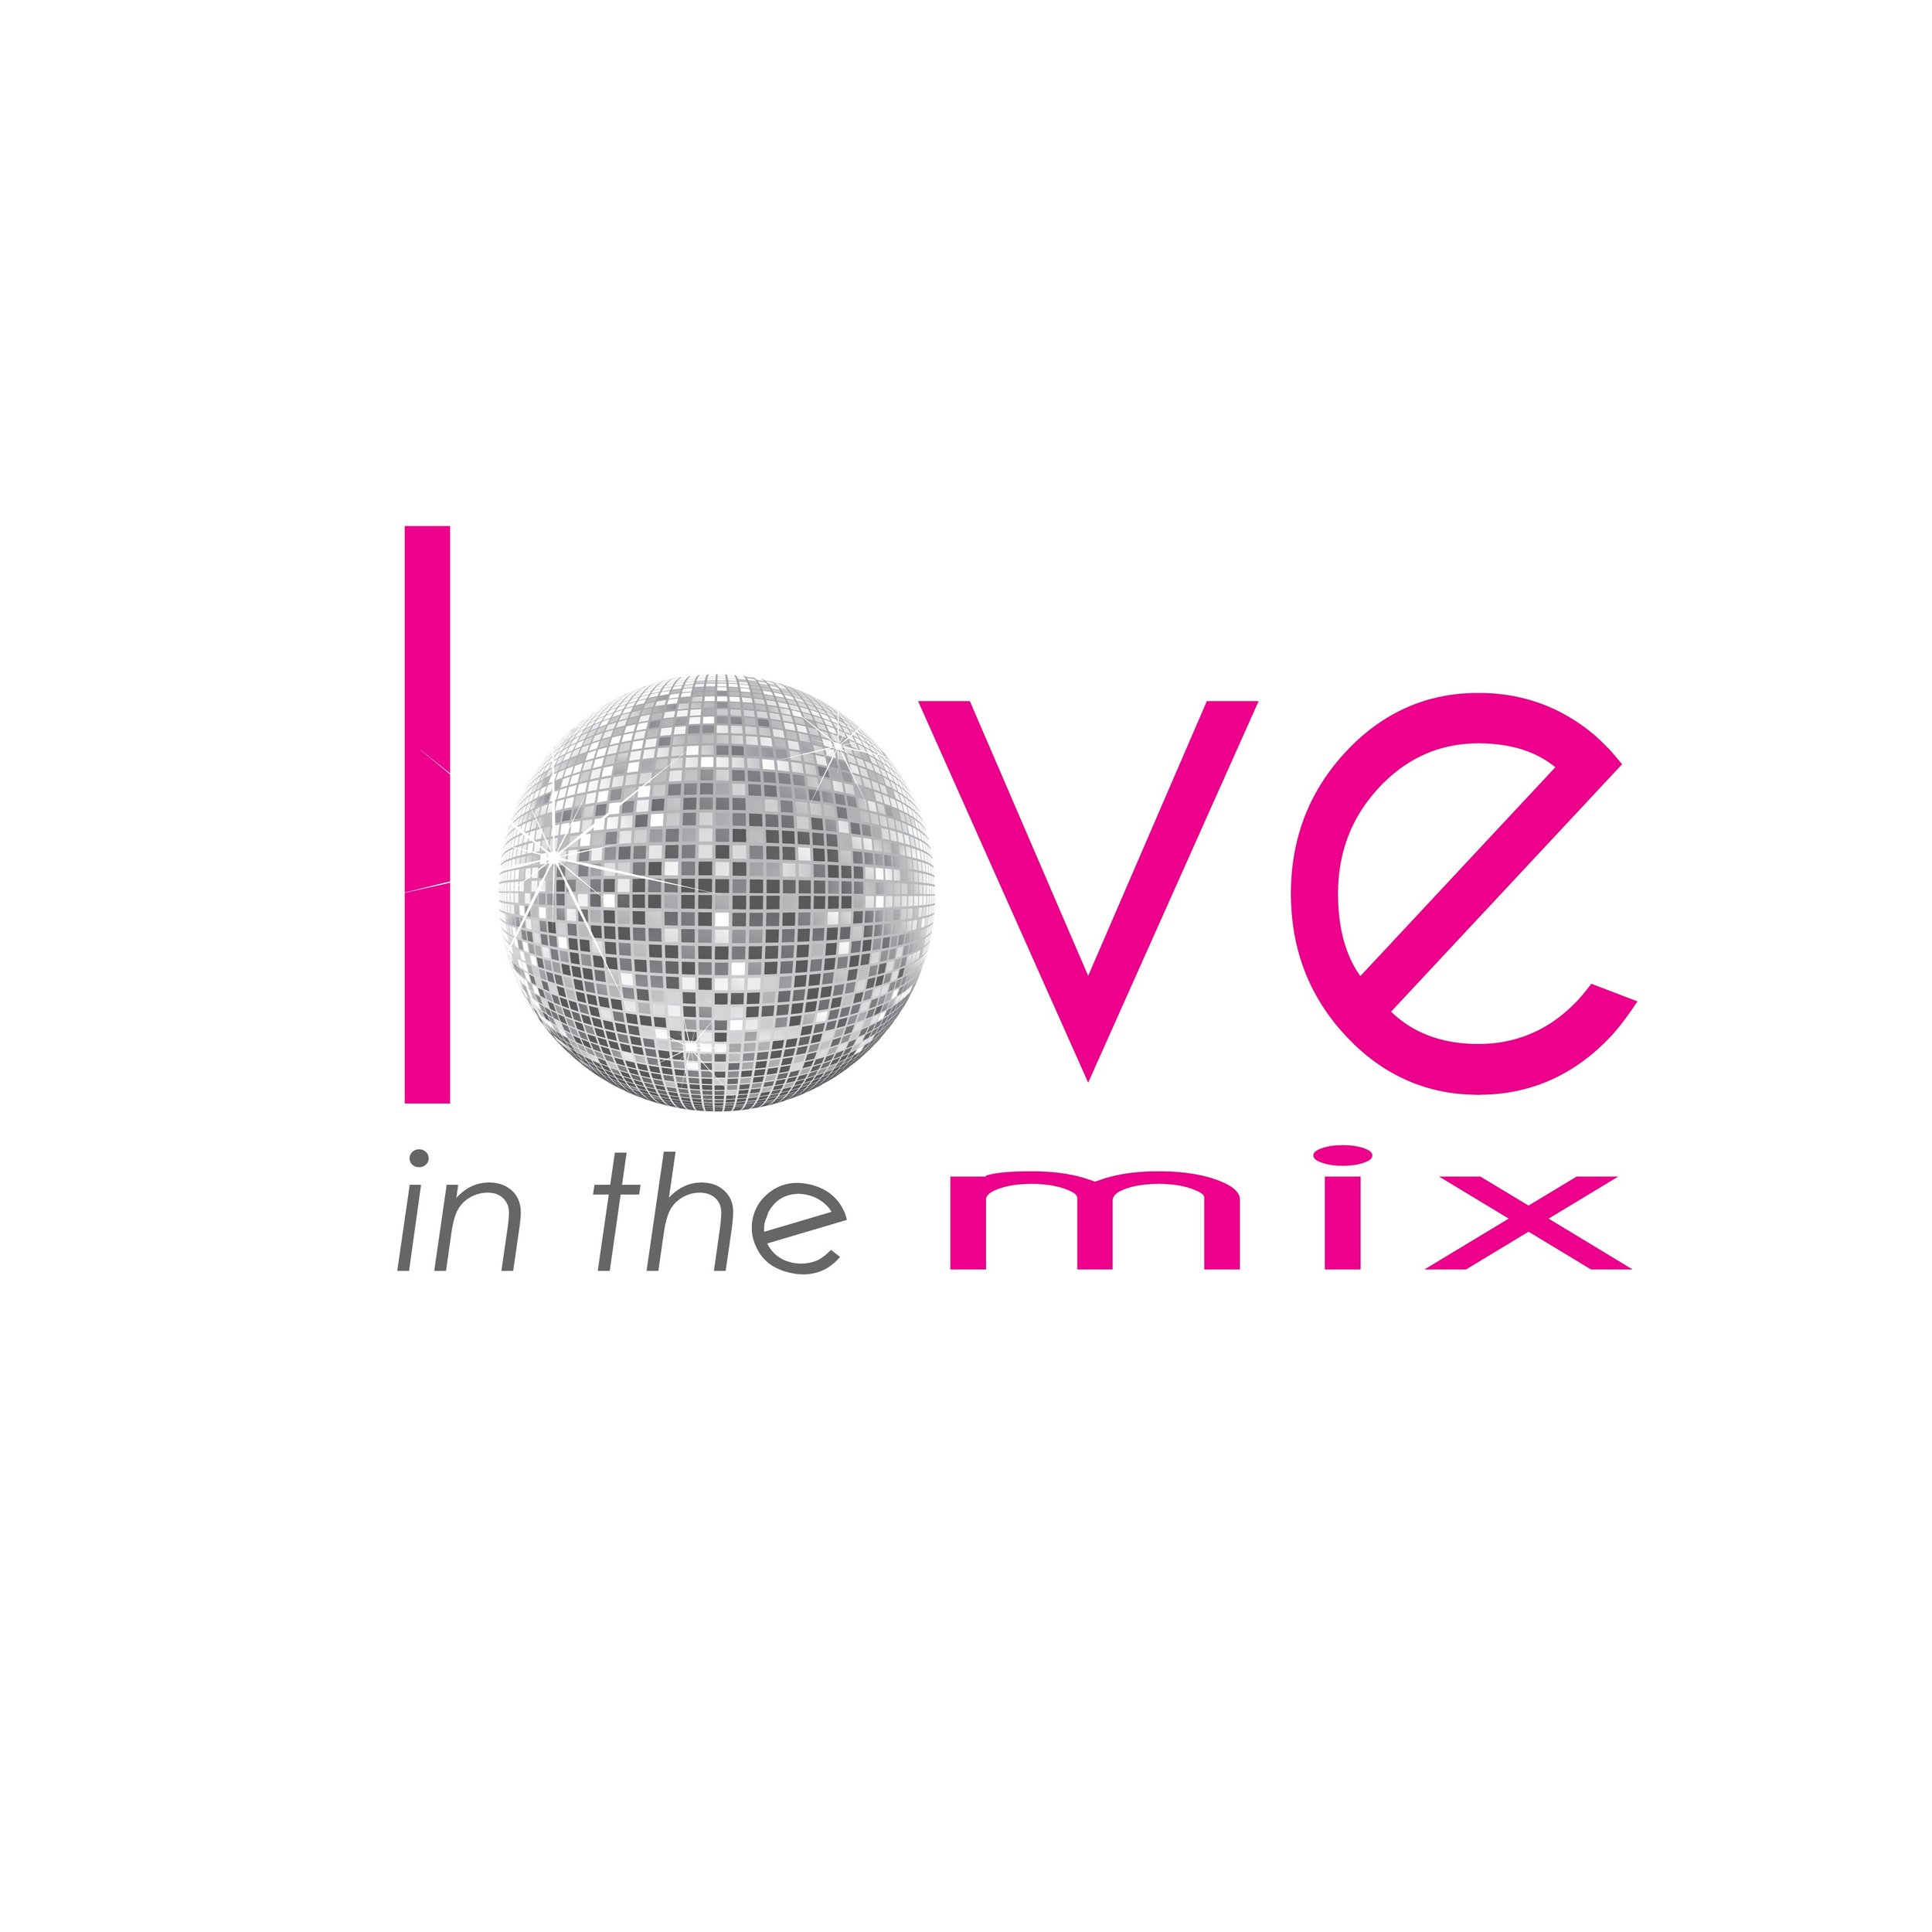 LoveintheMix-VerticalColor logo.jpg